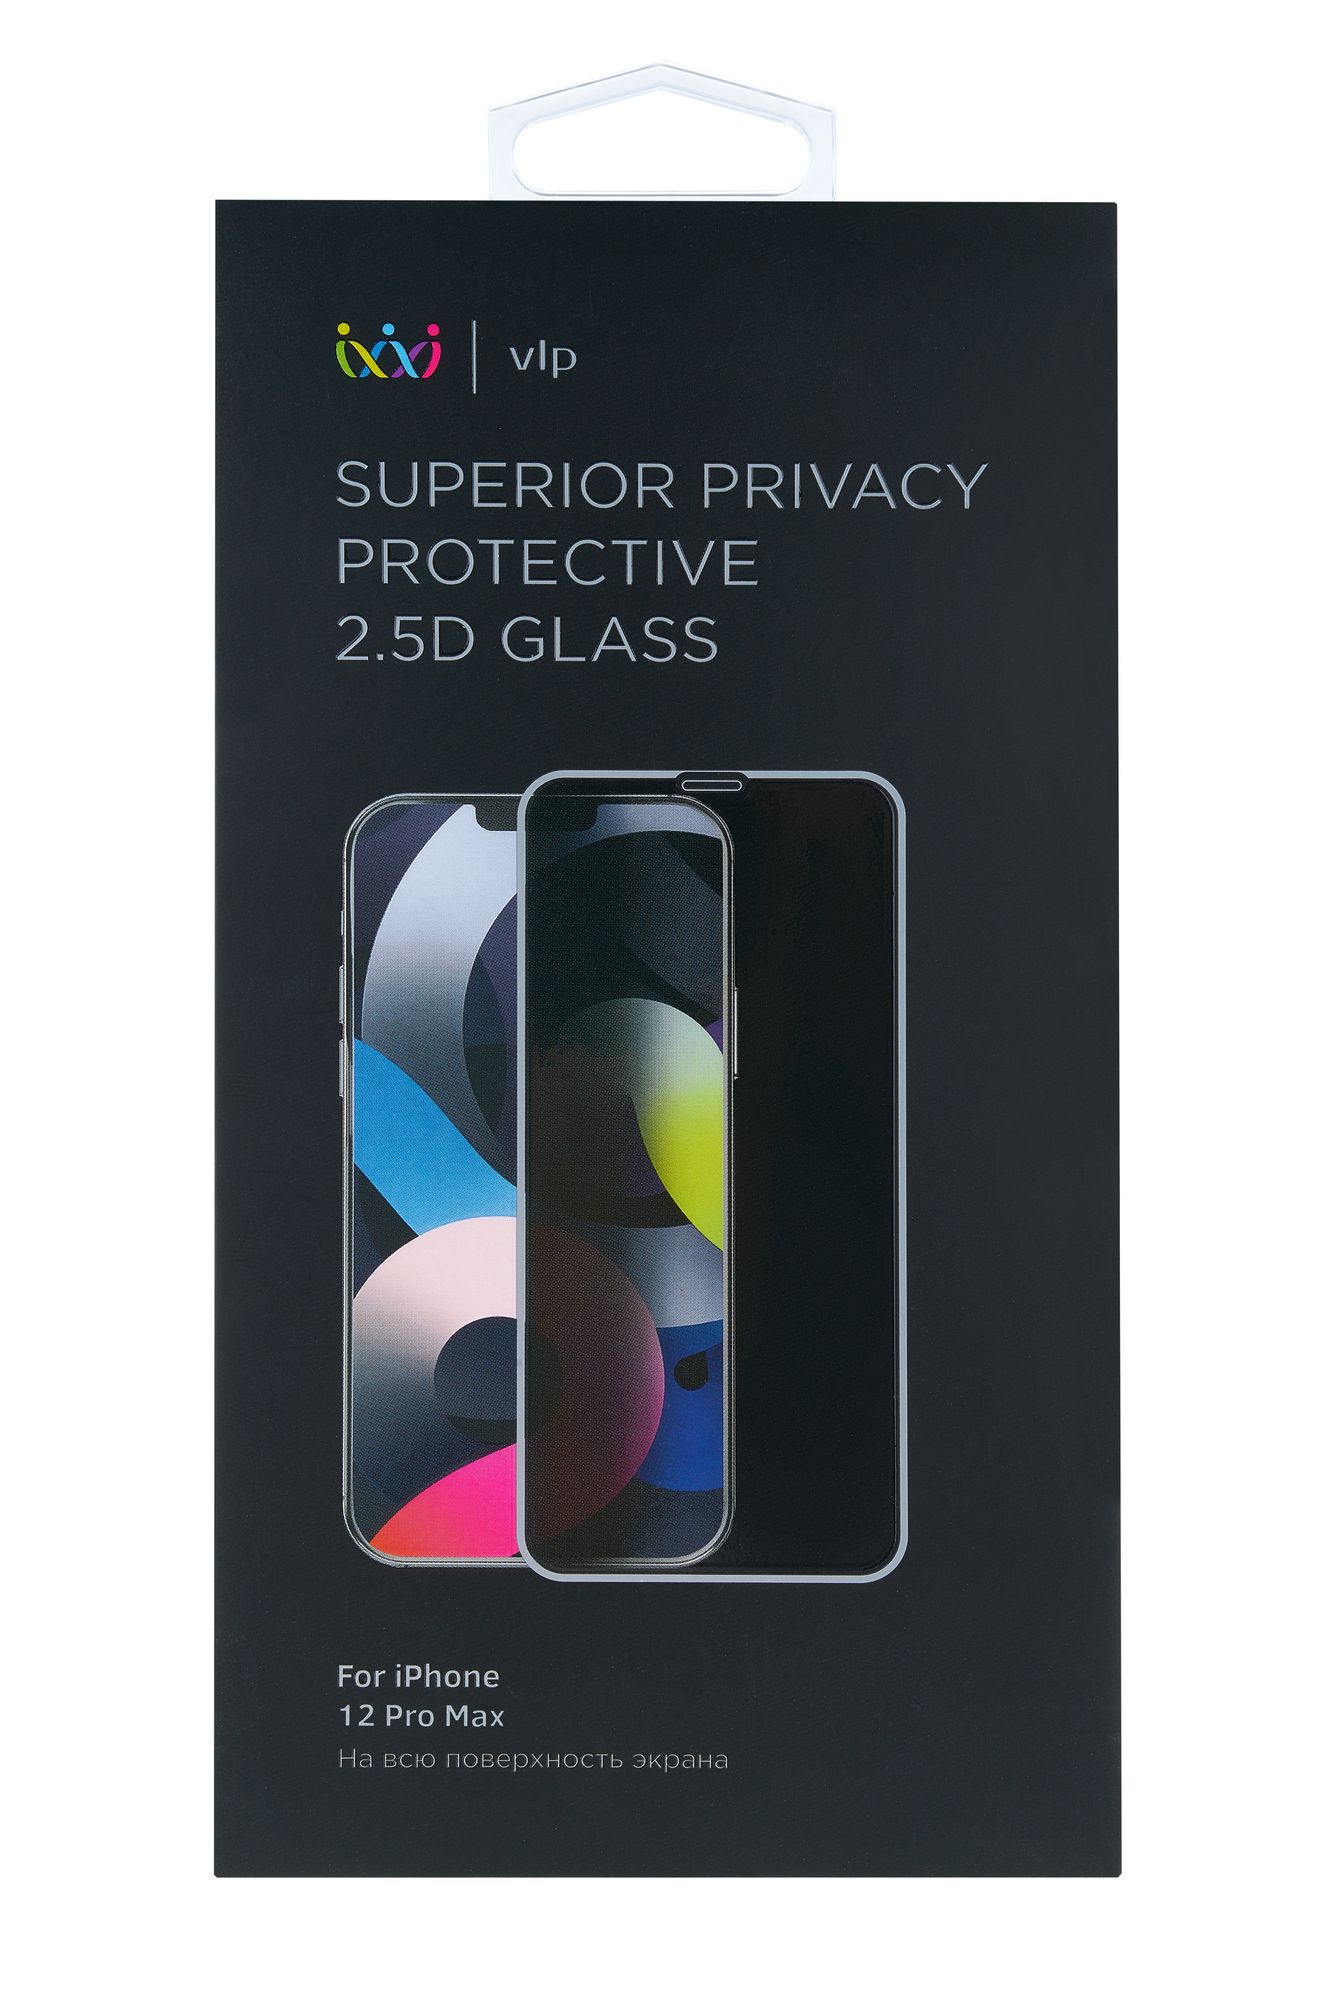 Стекло 2.5D защитное VLP Privacy для iPhone 12 ProMax, черная рамка защитное стекло deppa privacy 3d iphone xr 11 черная рамка 62599